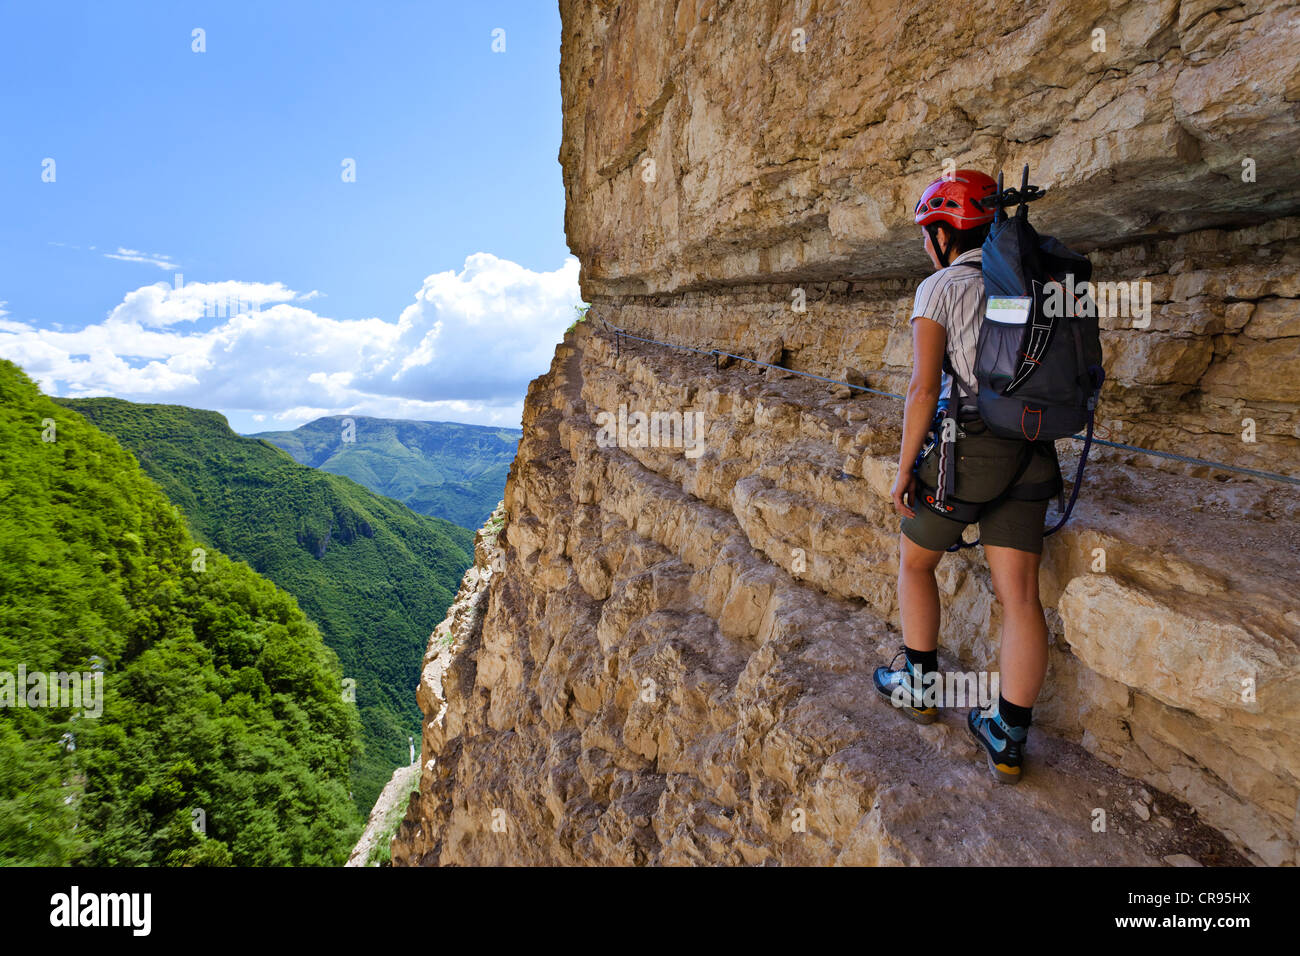 Climber on the Gerardo Sega fixed rope route on Mounte Baldo mountain above Avio, Lake Garda region, province of Trento, Italy Stock Photo